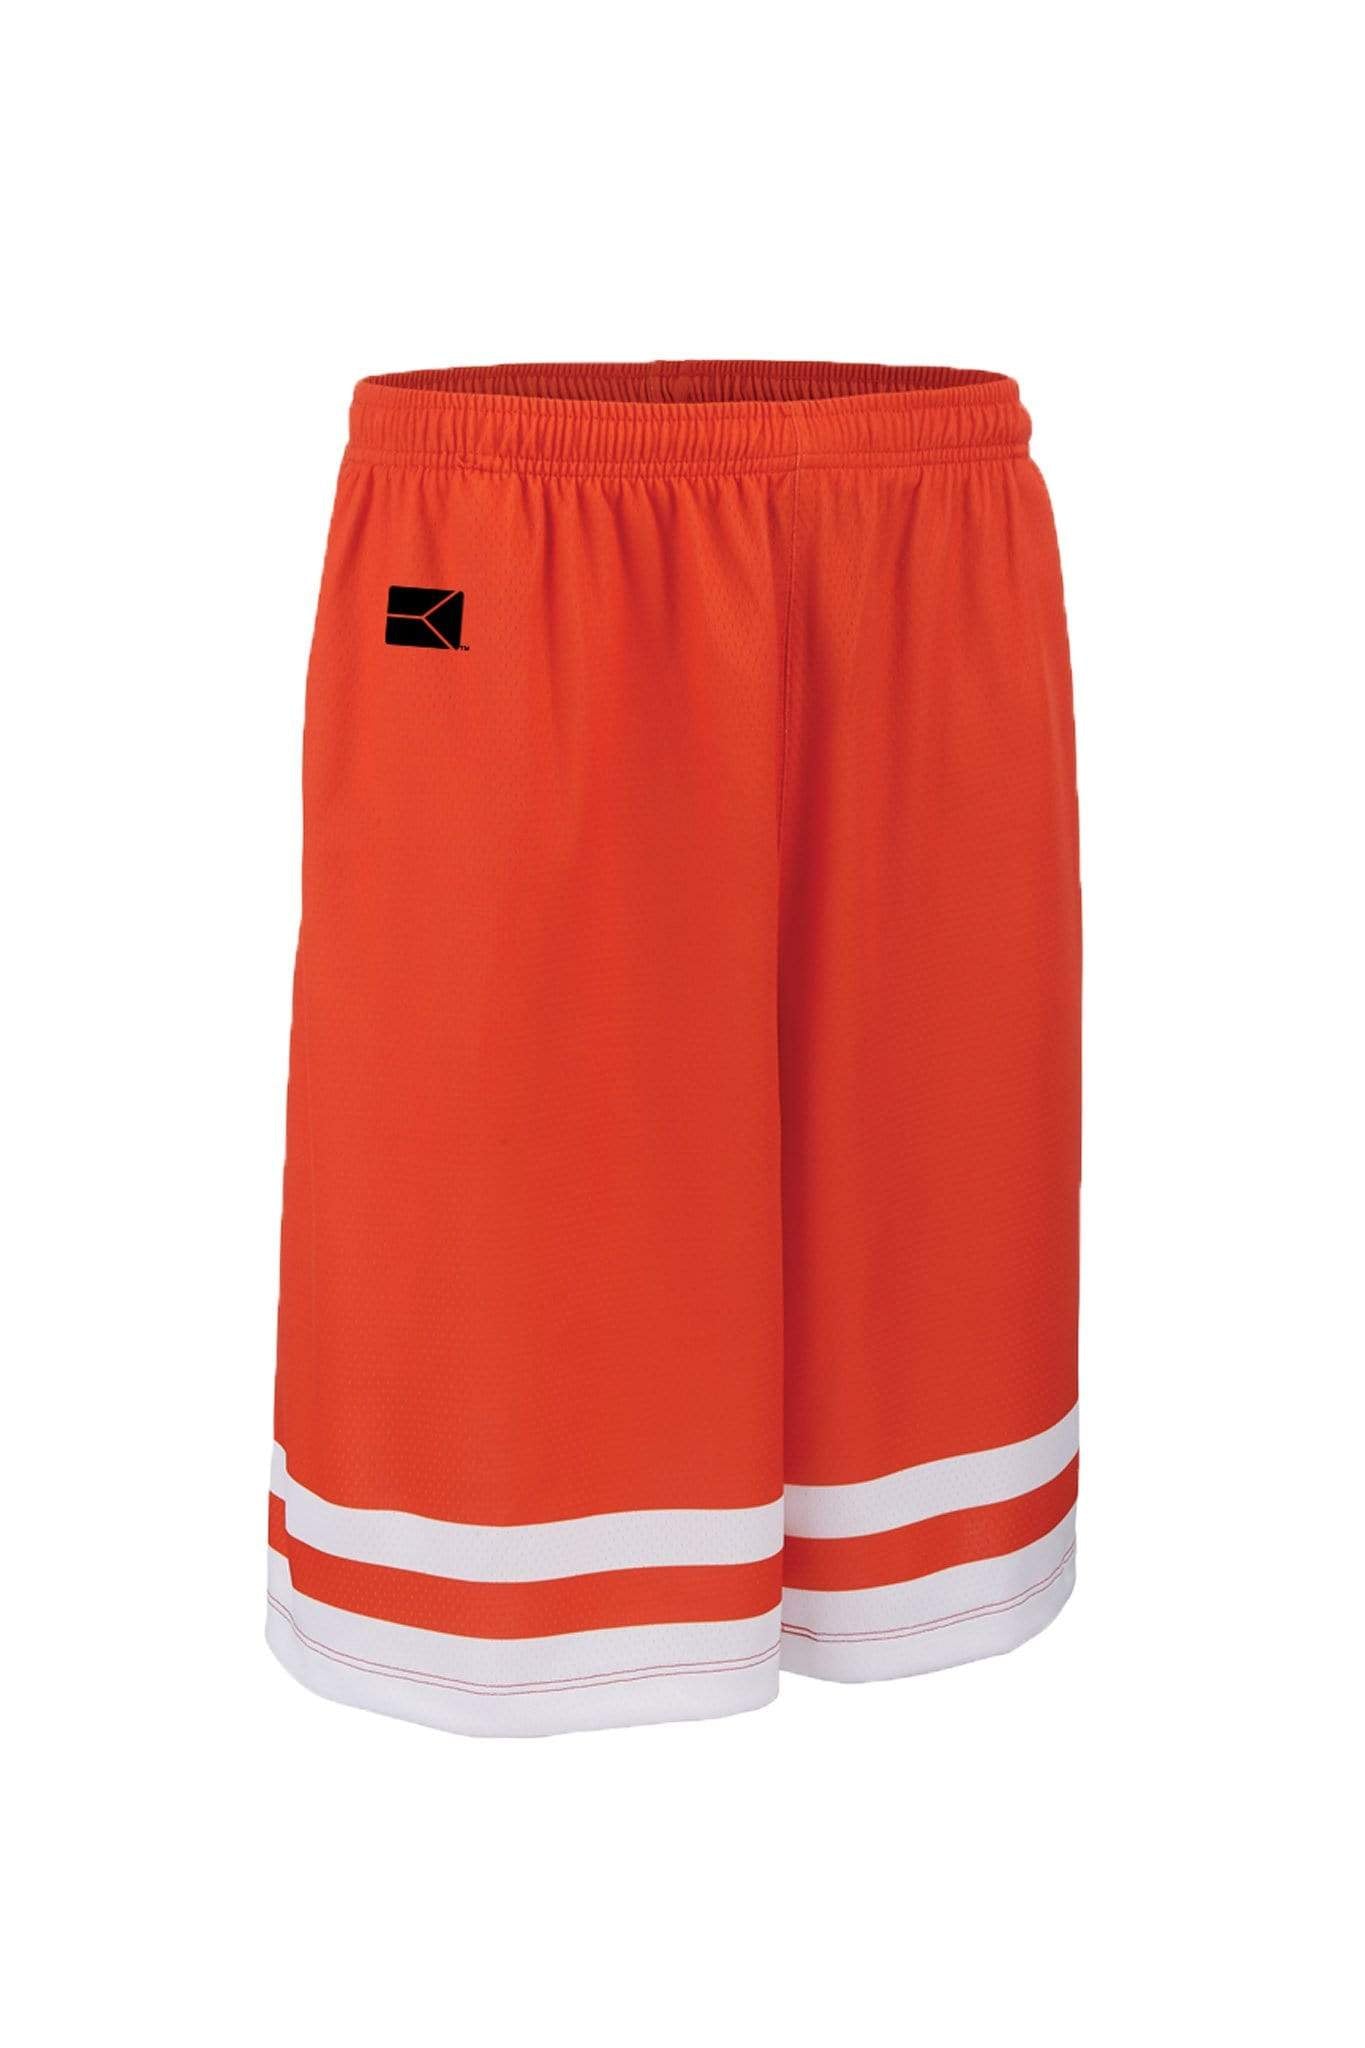 mens basketball shorts custom